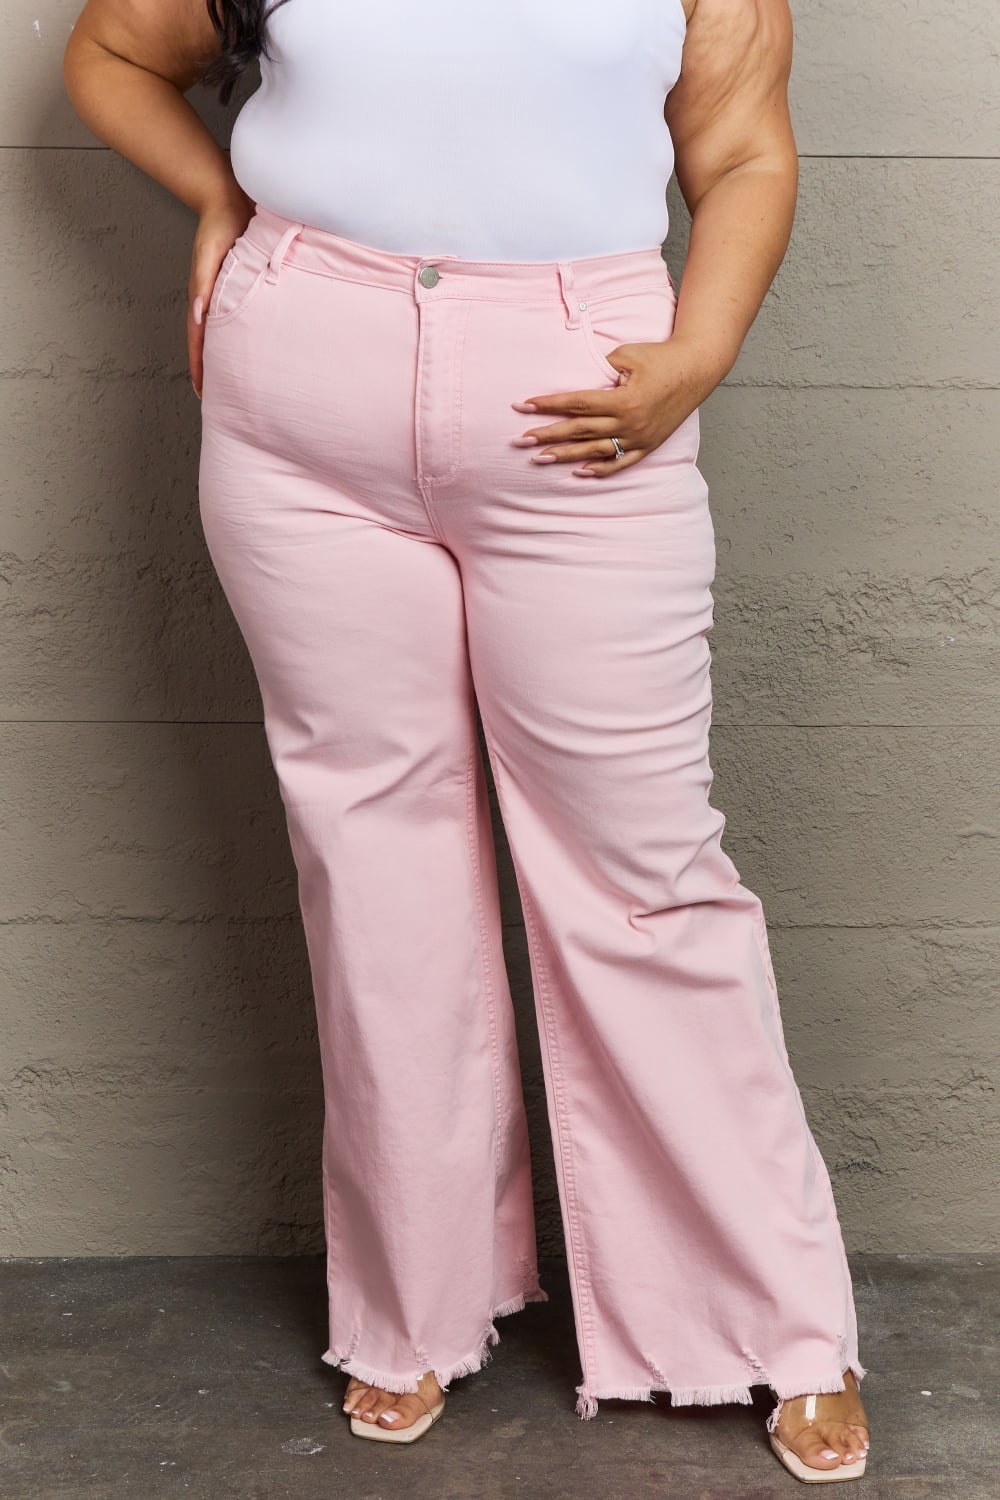 RISEN Raelene High Waist Wide Leg Jeans in Light Pink - Online Only